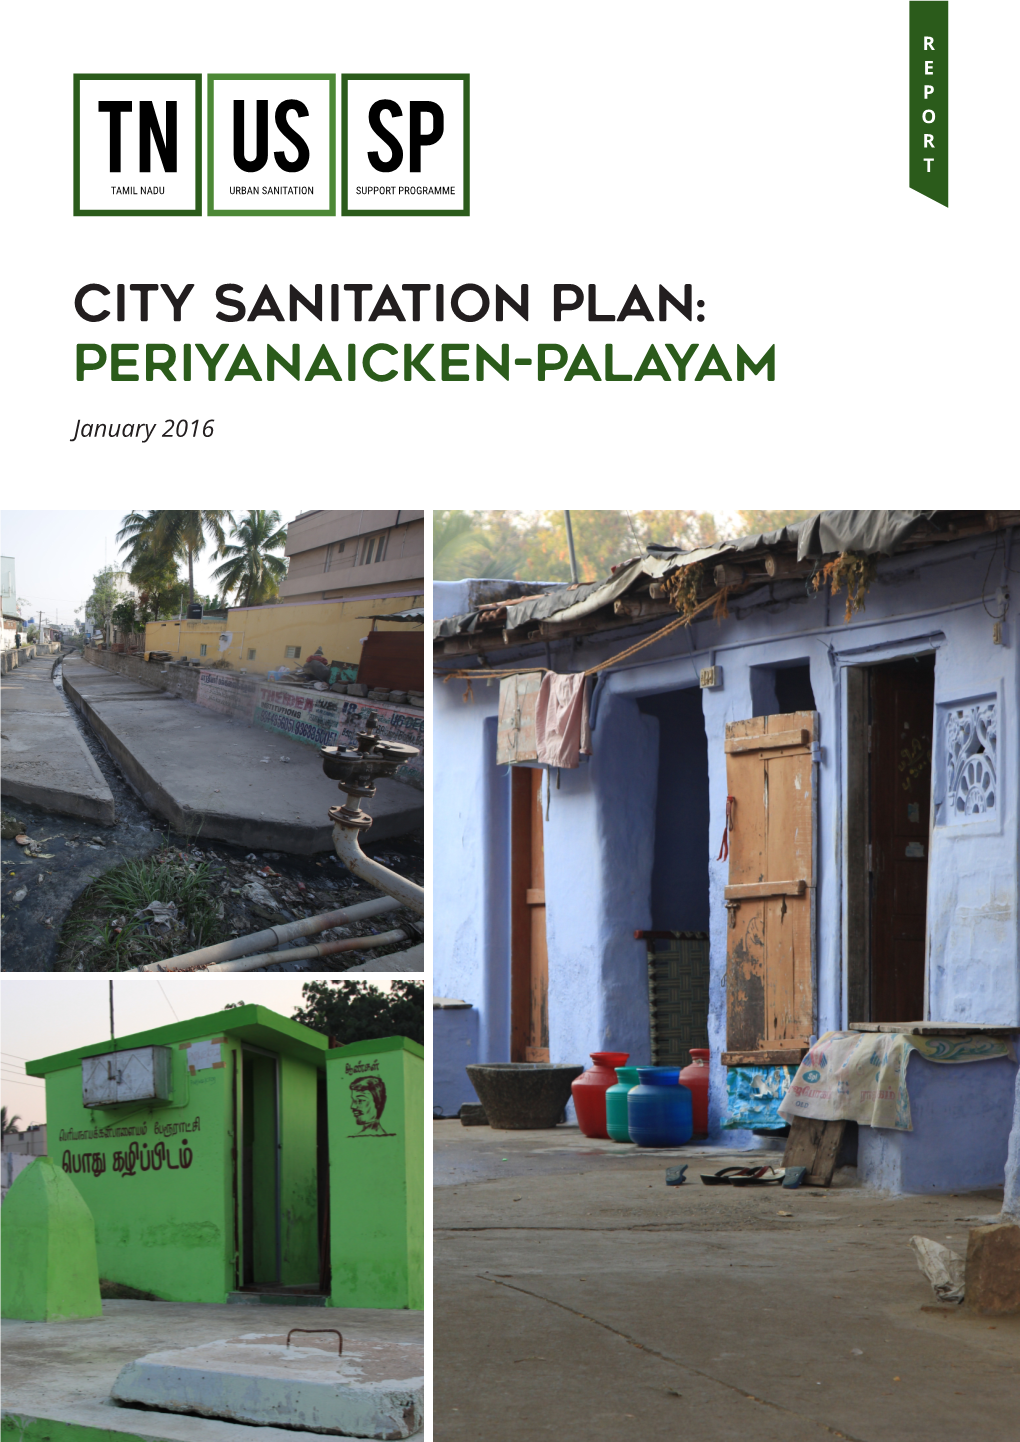 City Sanitation Plan: Periyanaicken-Palayam